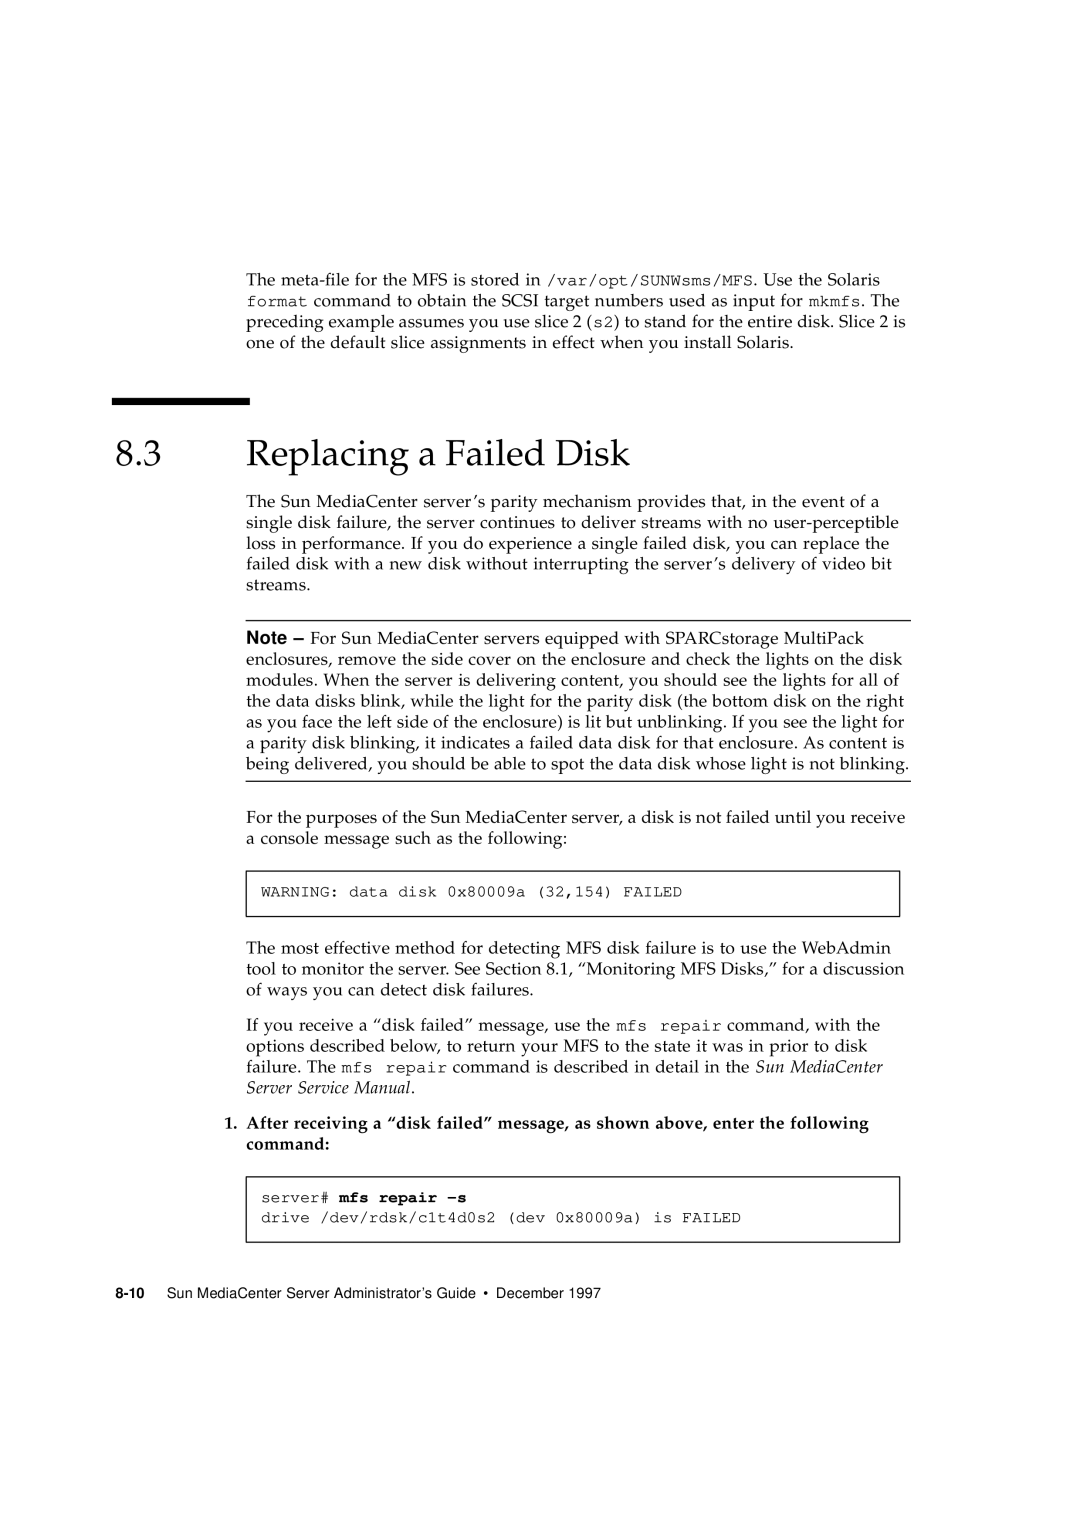 Sun Microsystems 2.1 manual Replacing a Failed Disk, Sun MediaCenter Server Administrator’s Guide December 